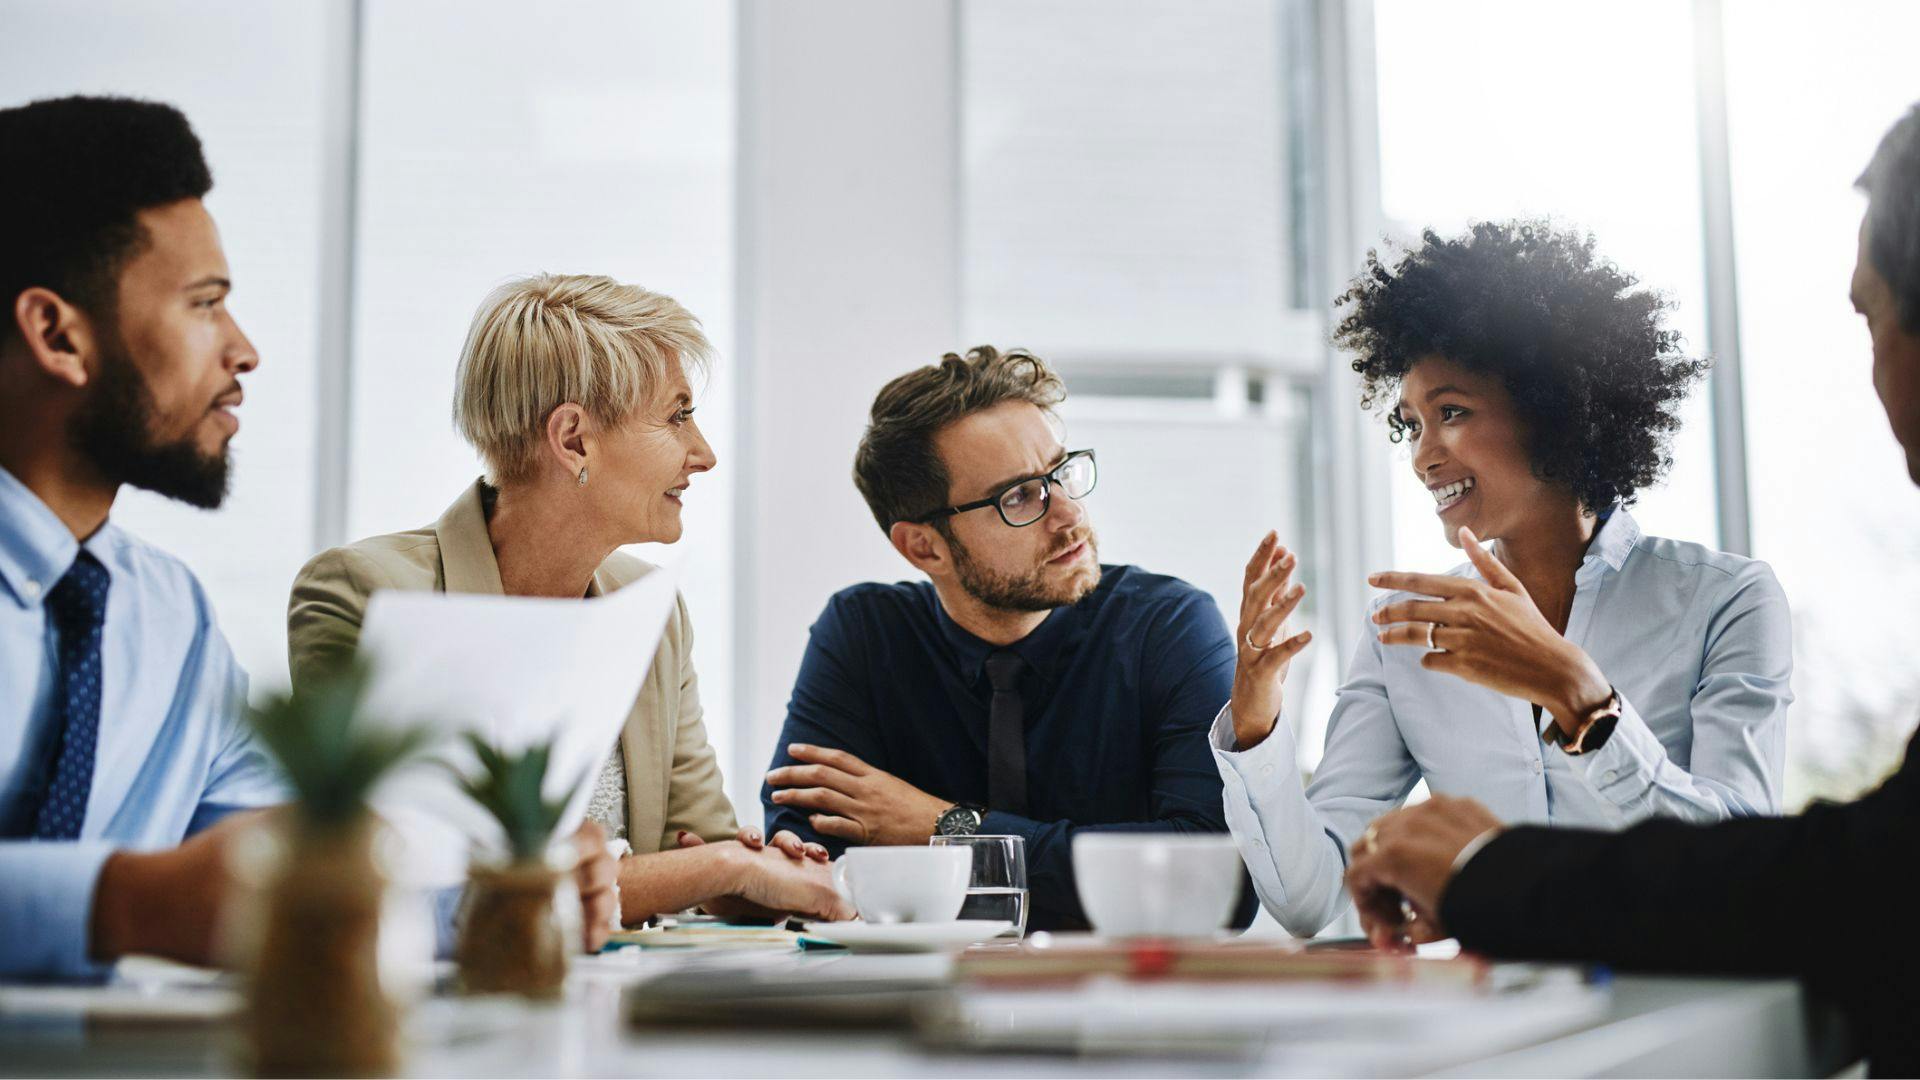 10 Communication Tips to Avoid Workplace Misunderstandings